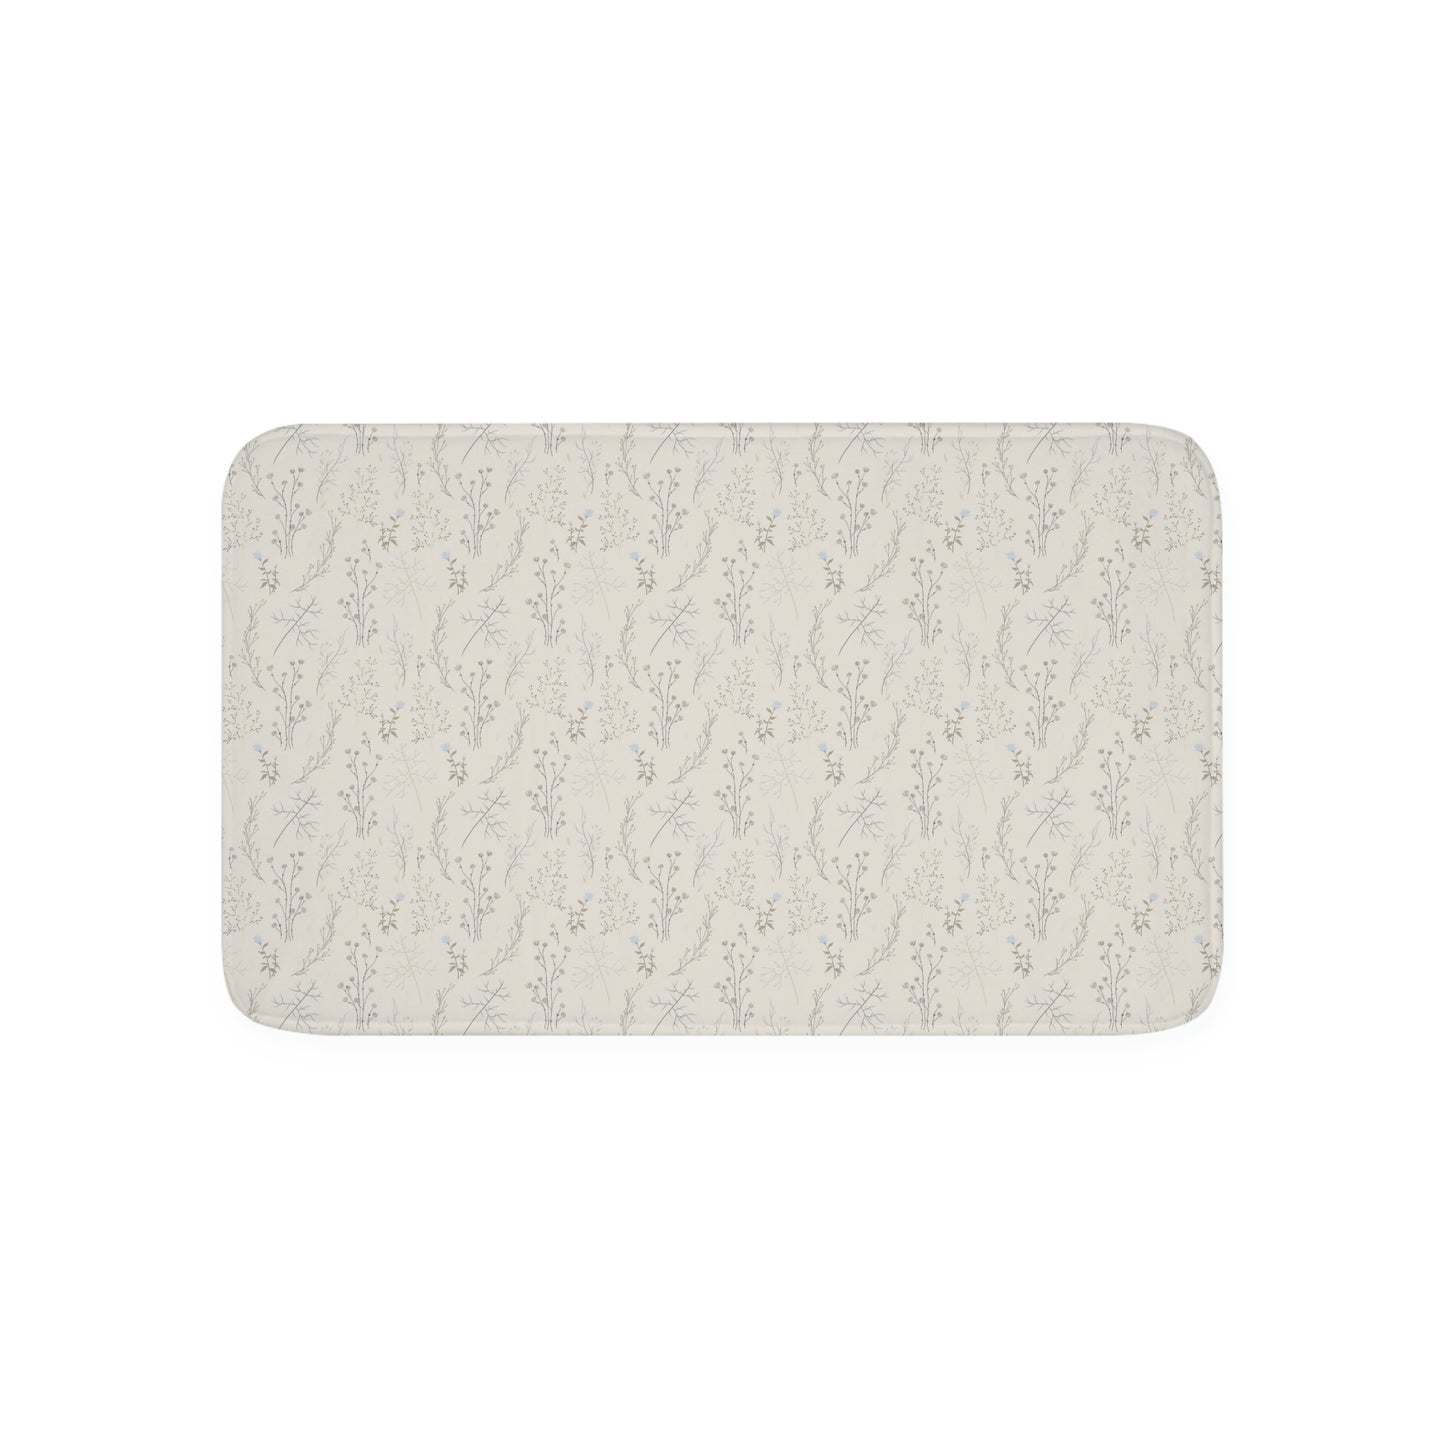 Floral Print Memory Foam Bathmat | 2 Sizes Available